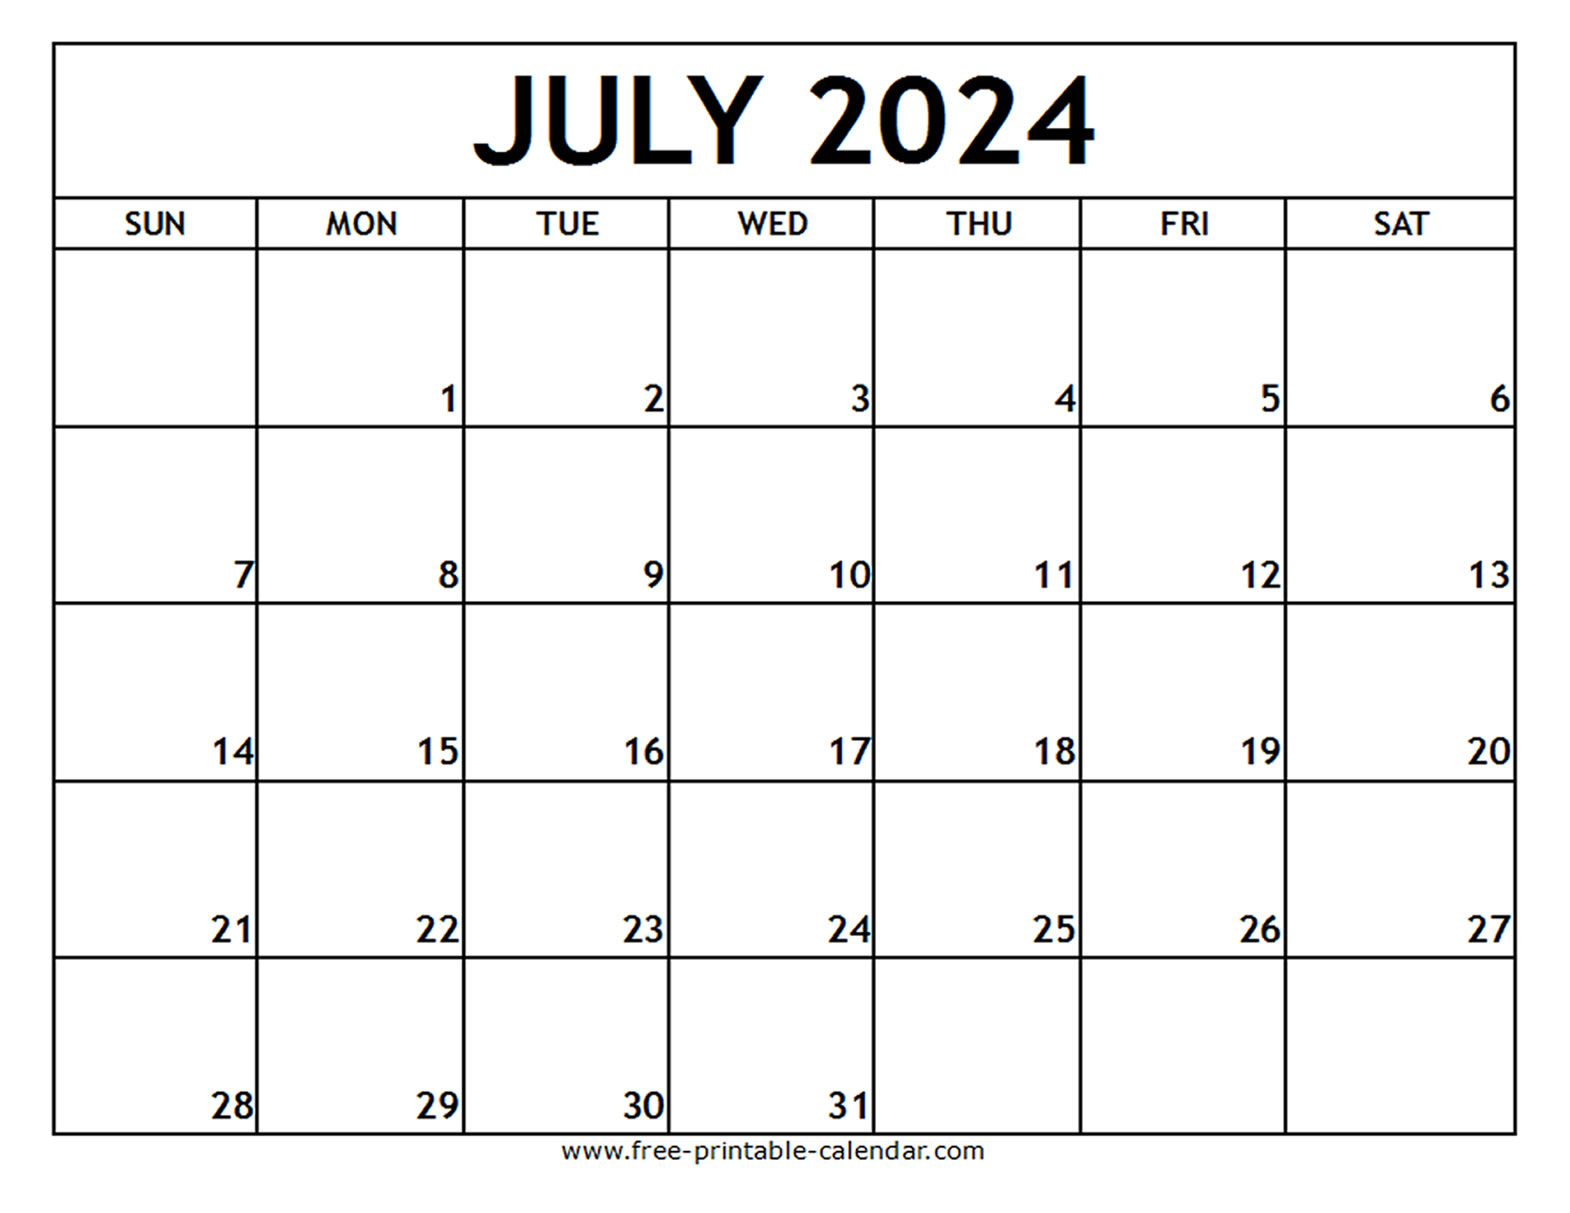 July 2024 Printable Calendar - Free-Printable-Calendar | Calendar 2024